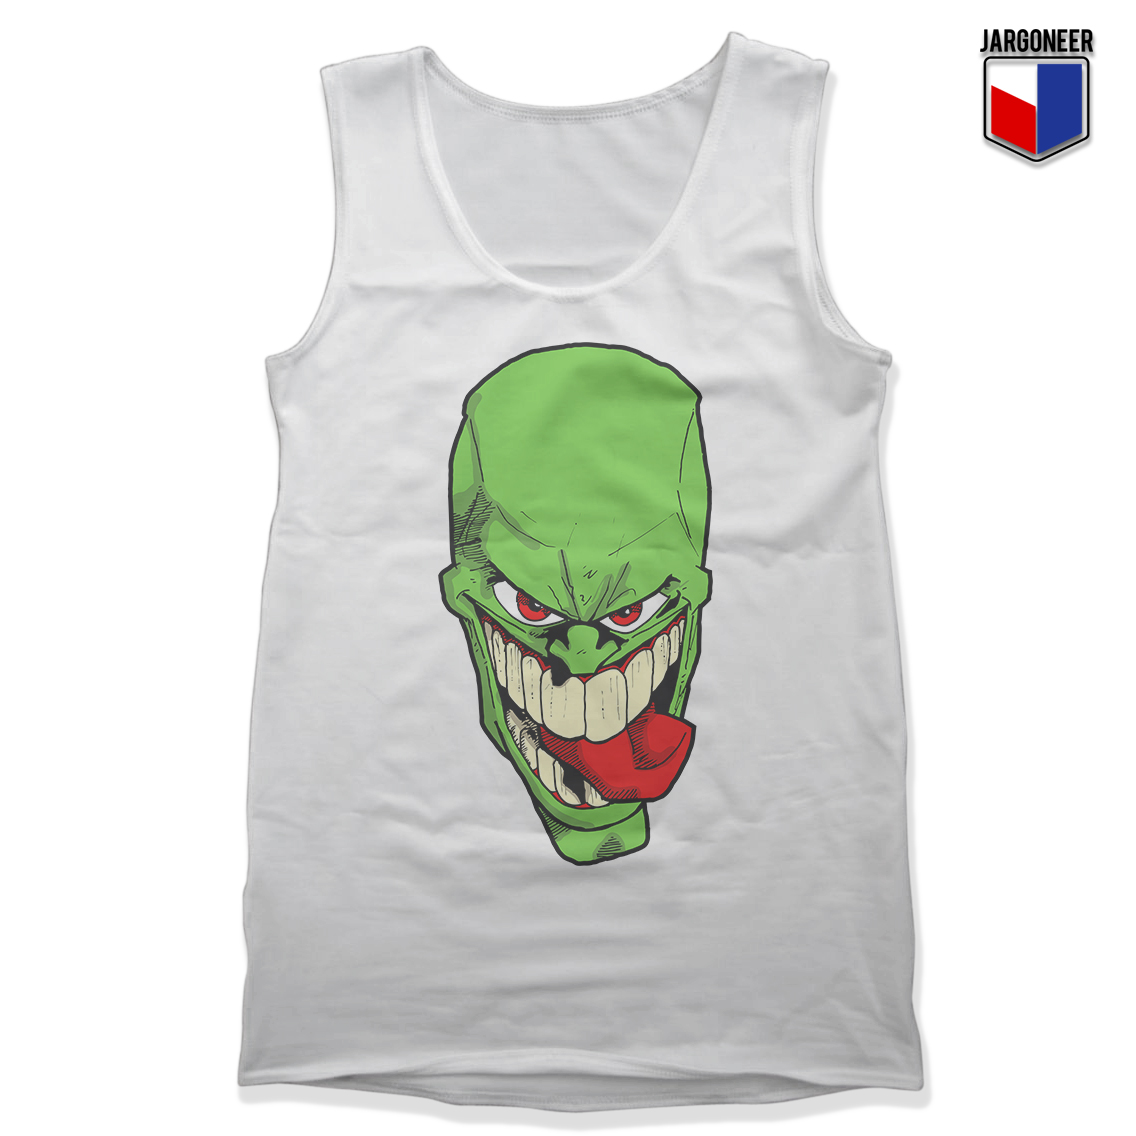 The Crazy Green Face Guy White Tank - Shop Unique Graphic Cool Shirt Designs